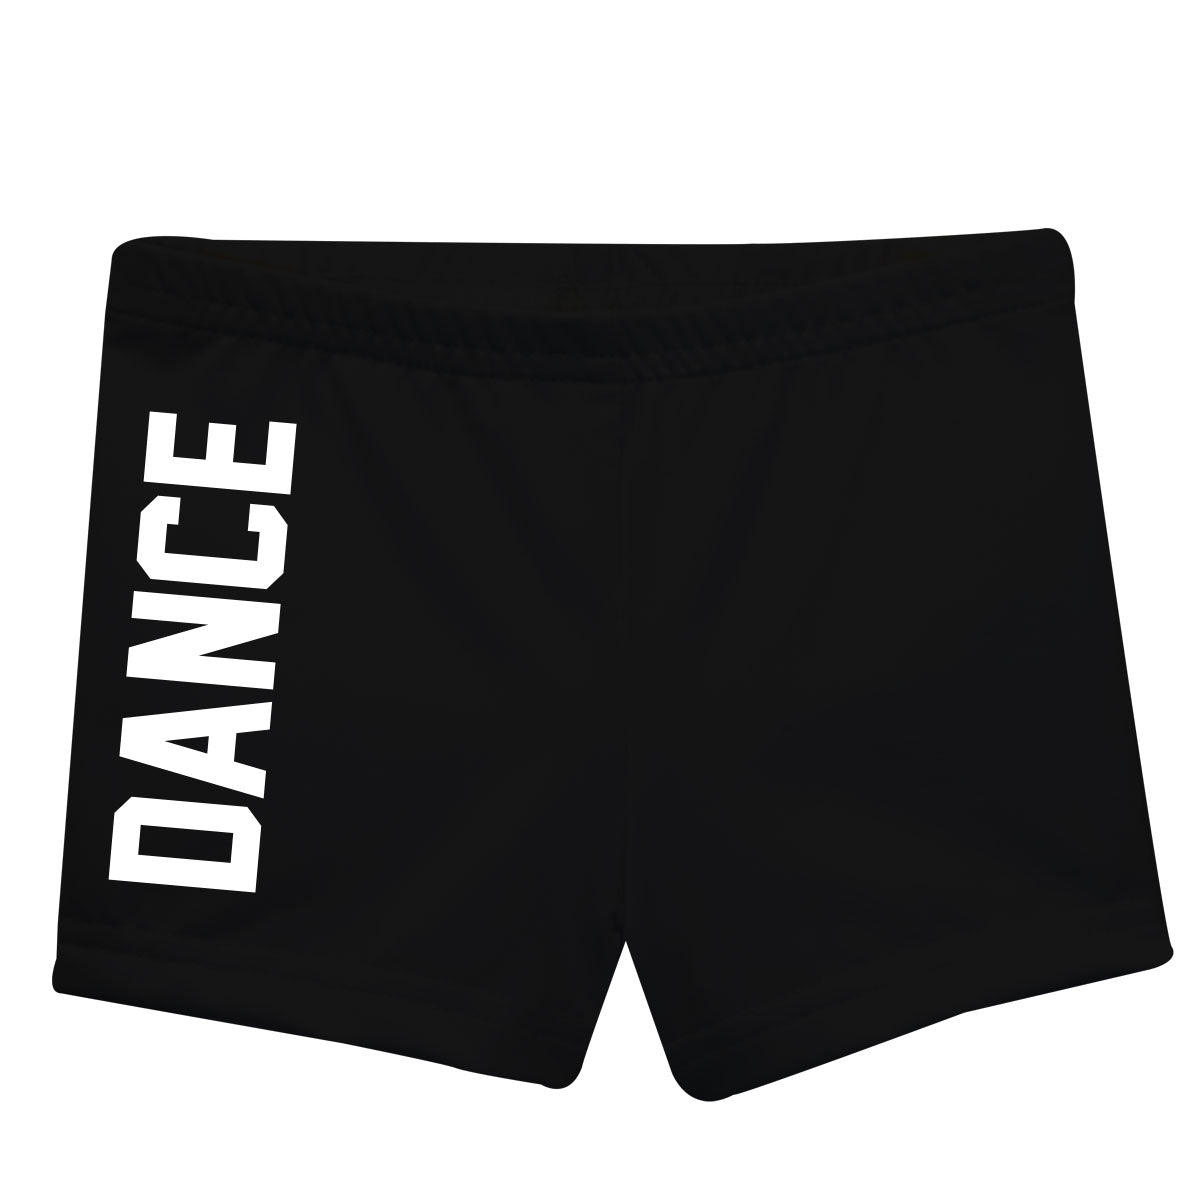 Black dance shorts